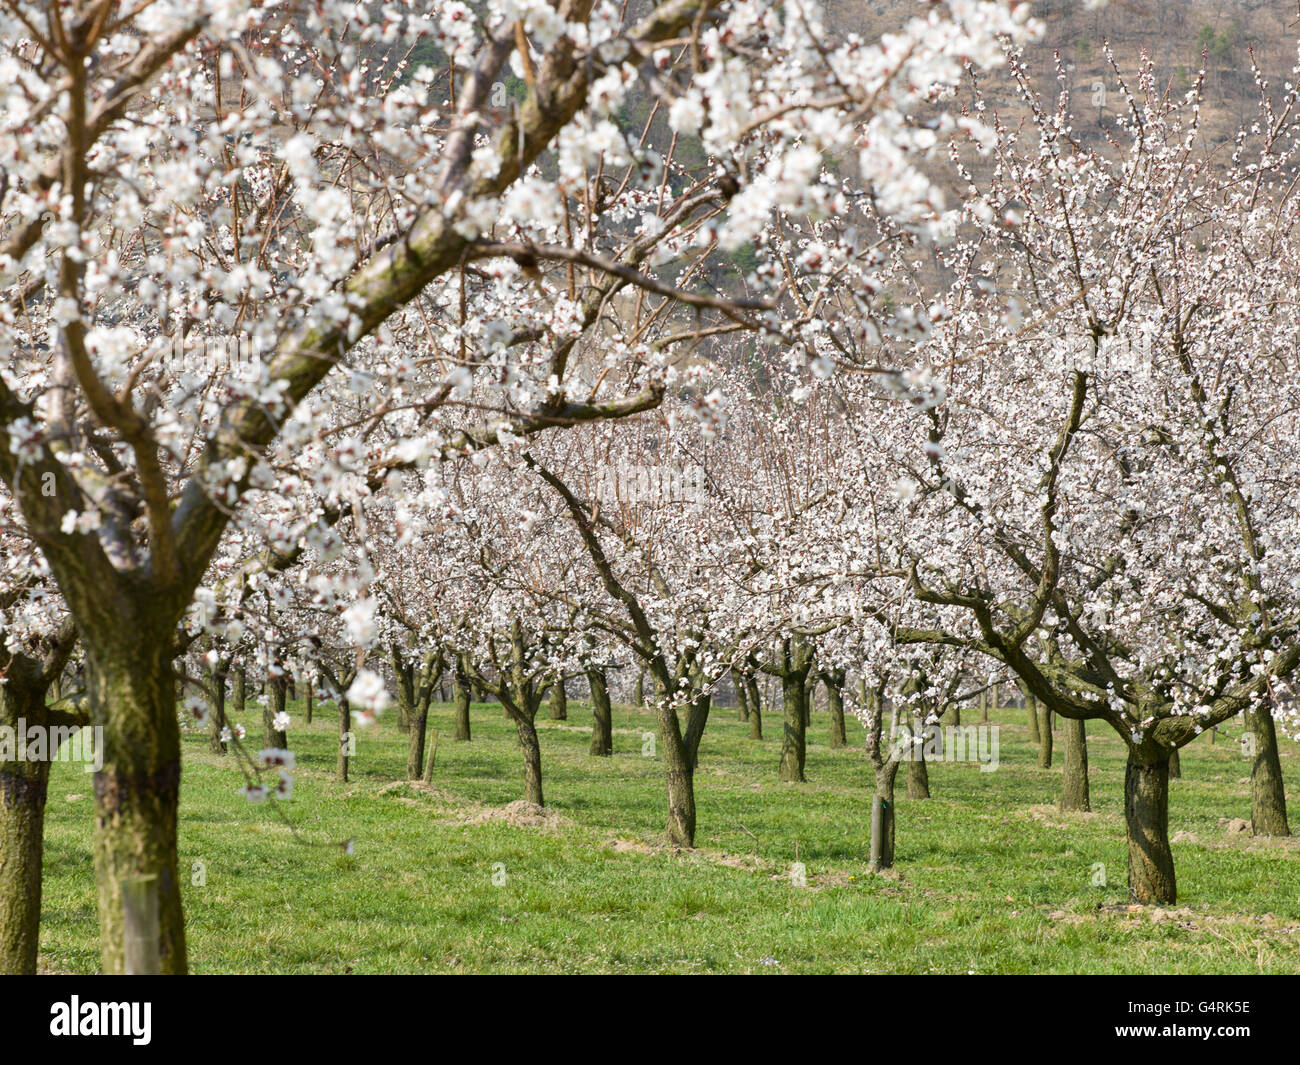 Apricot trees in full blossom (Prunus armeniaca), Wachau valley, Lower Austria, Austria, Europe Stock Photo